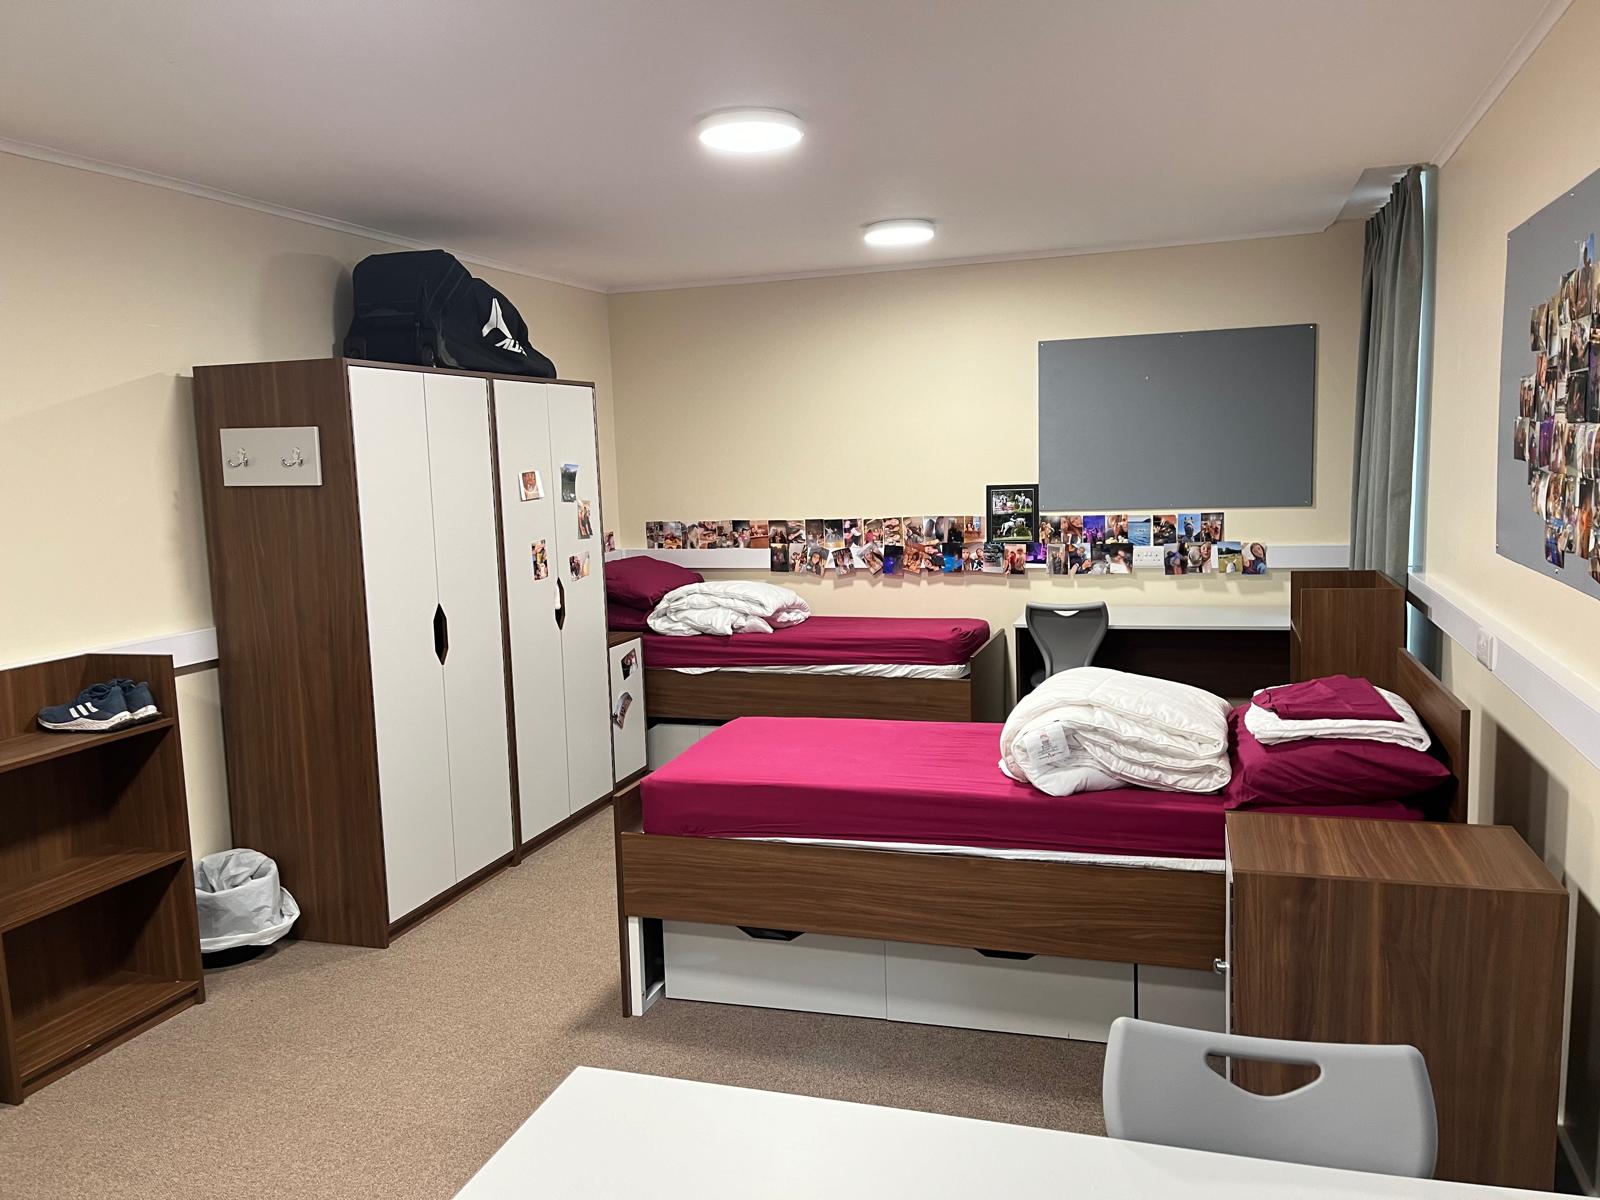 Shrewsbury School boarding accommodation